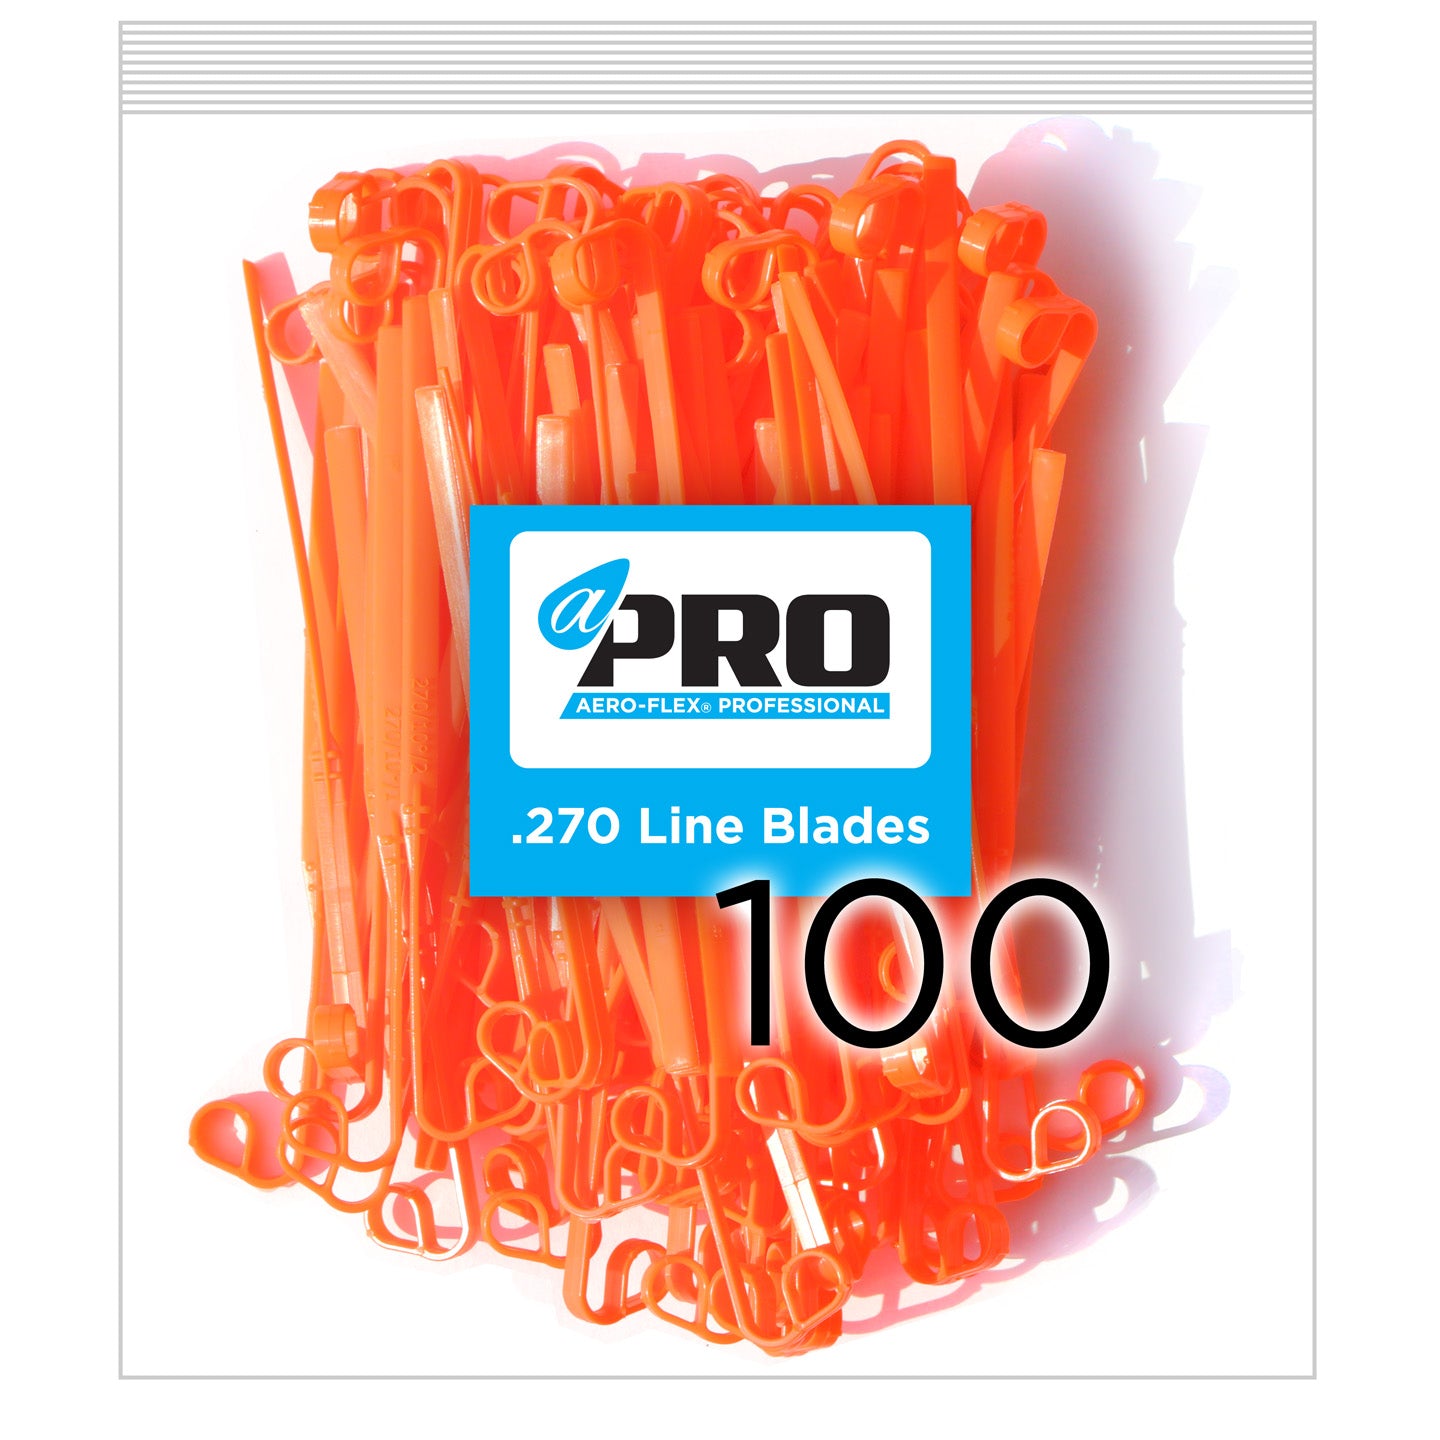 100 Pro .270 Line Blades - Orange (CW Sharp Side Leading)